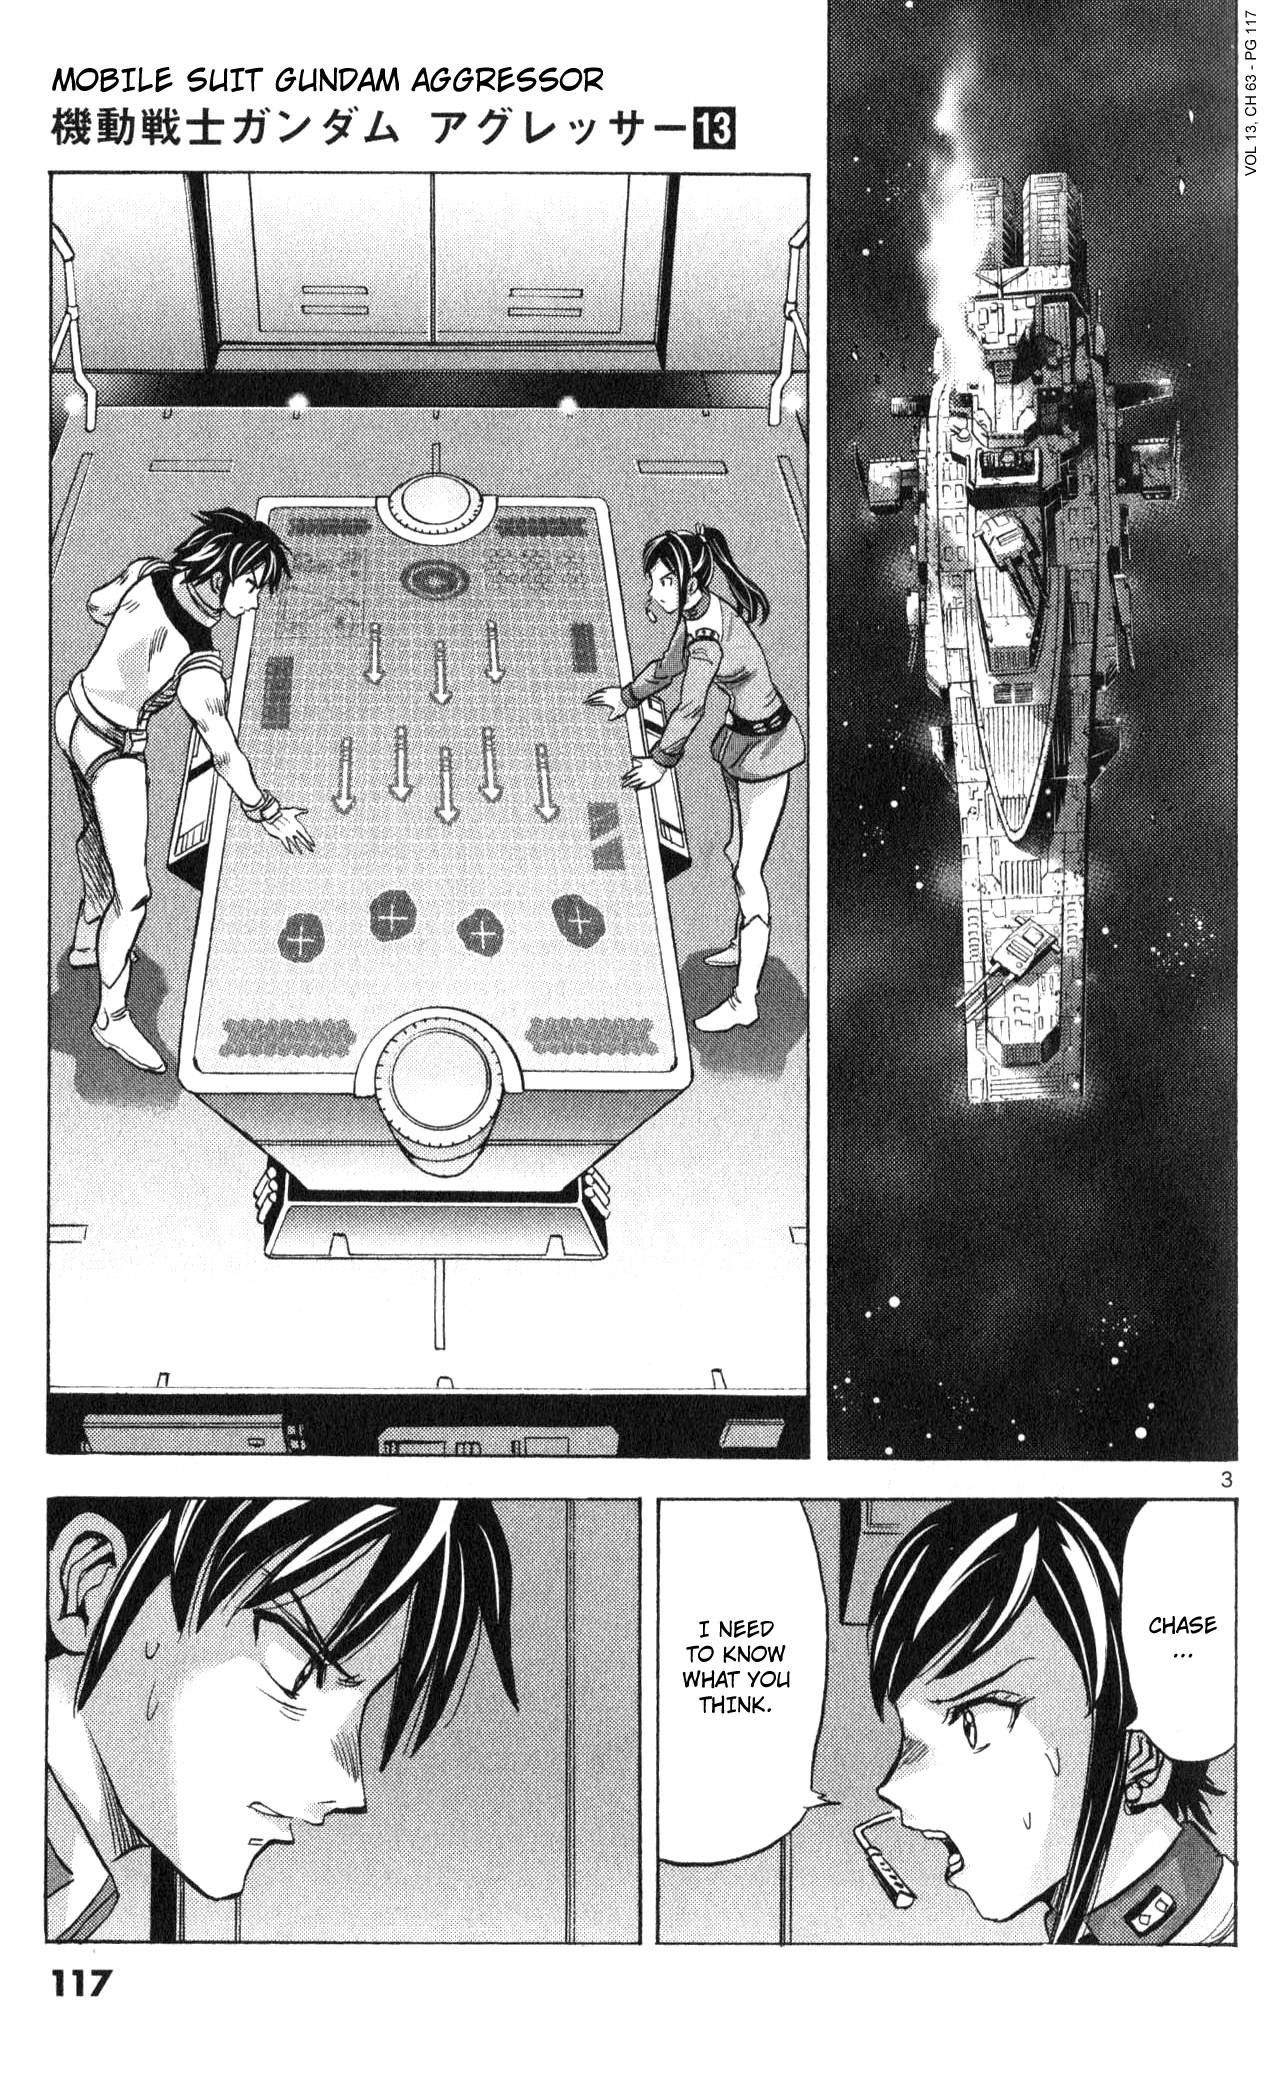 Mobile Suit Gundam Aggressor - chapter 63 - #3